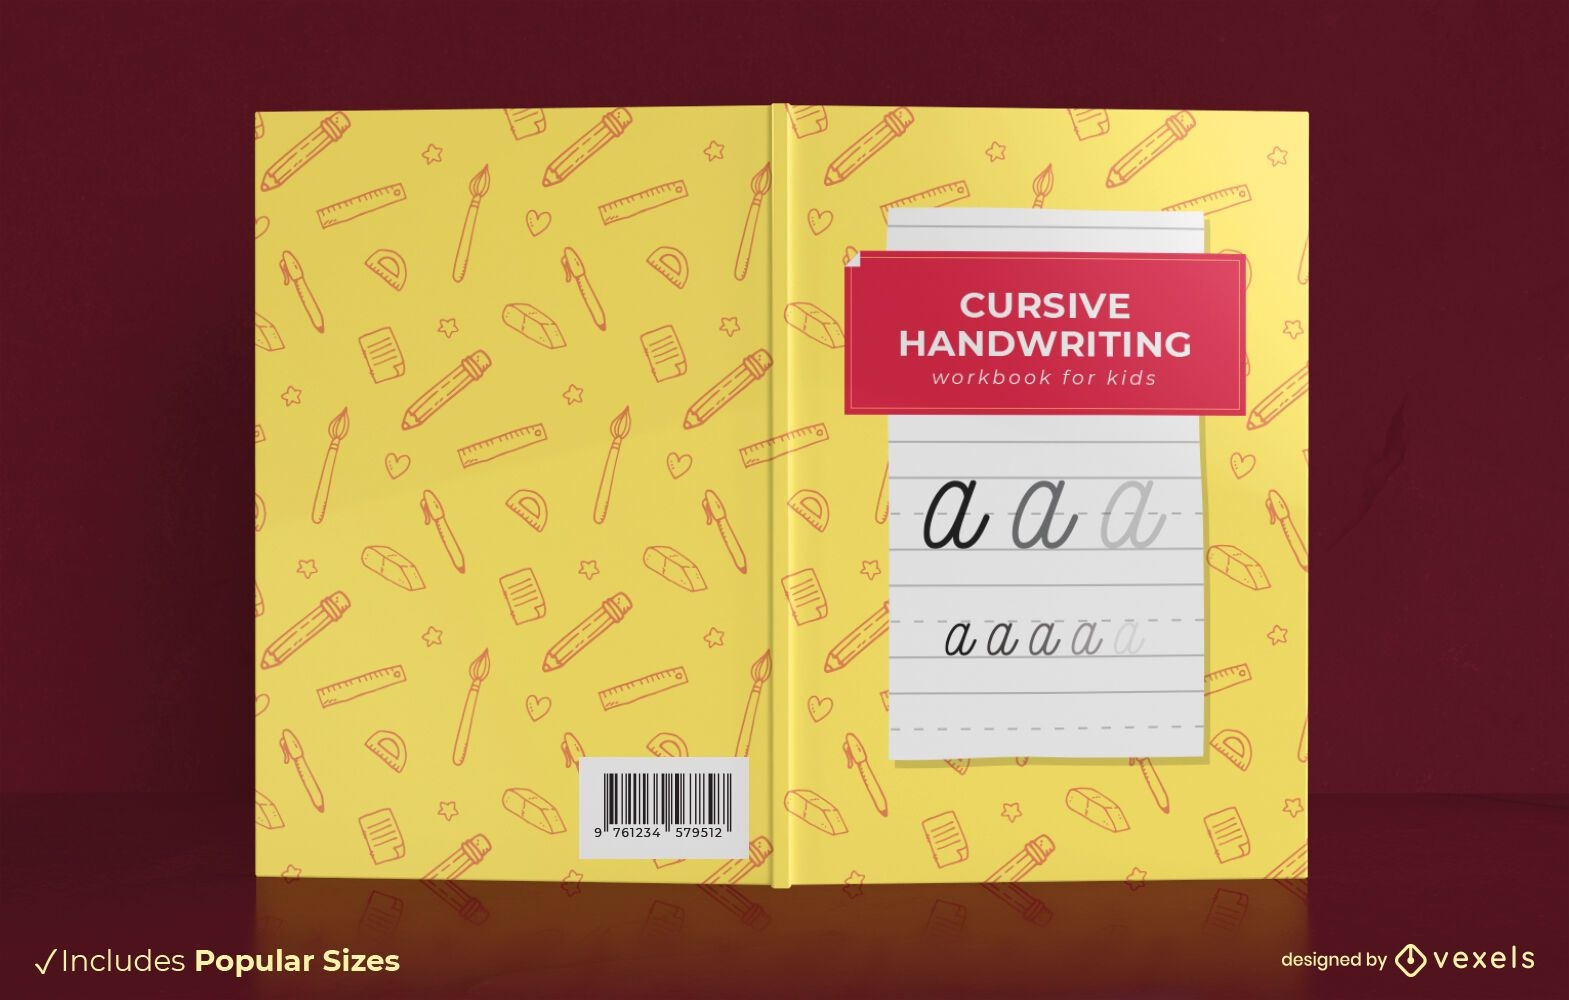 Cursive handwriting book cover design